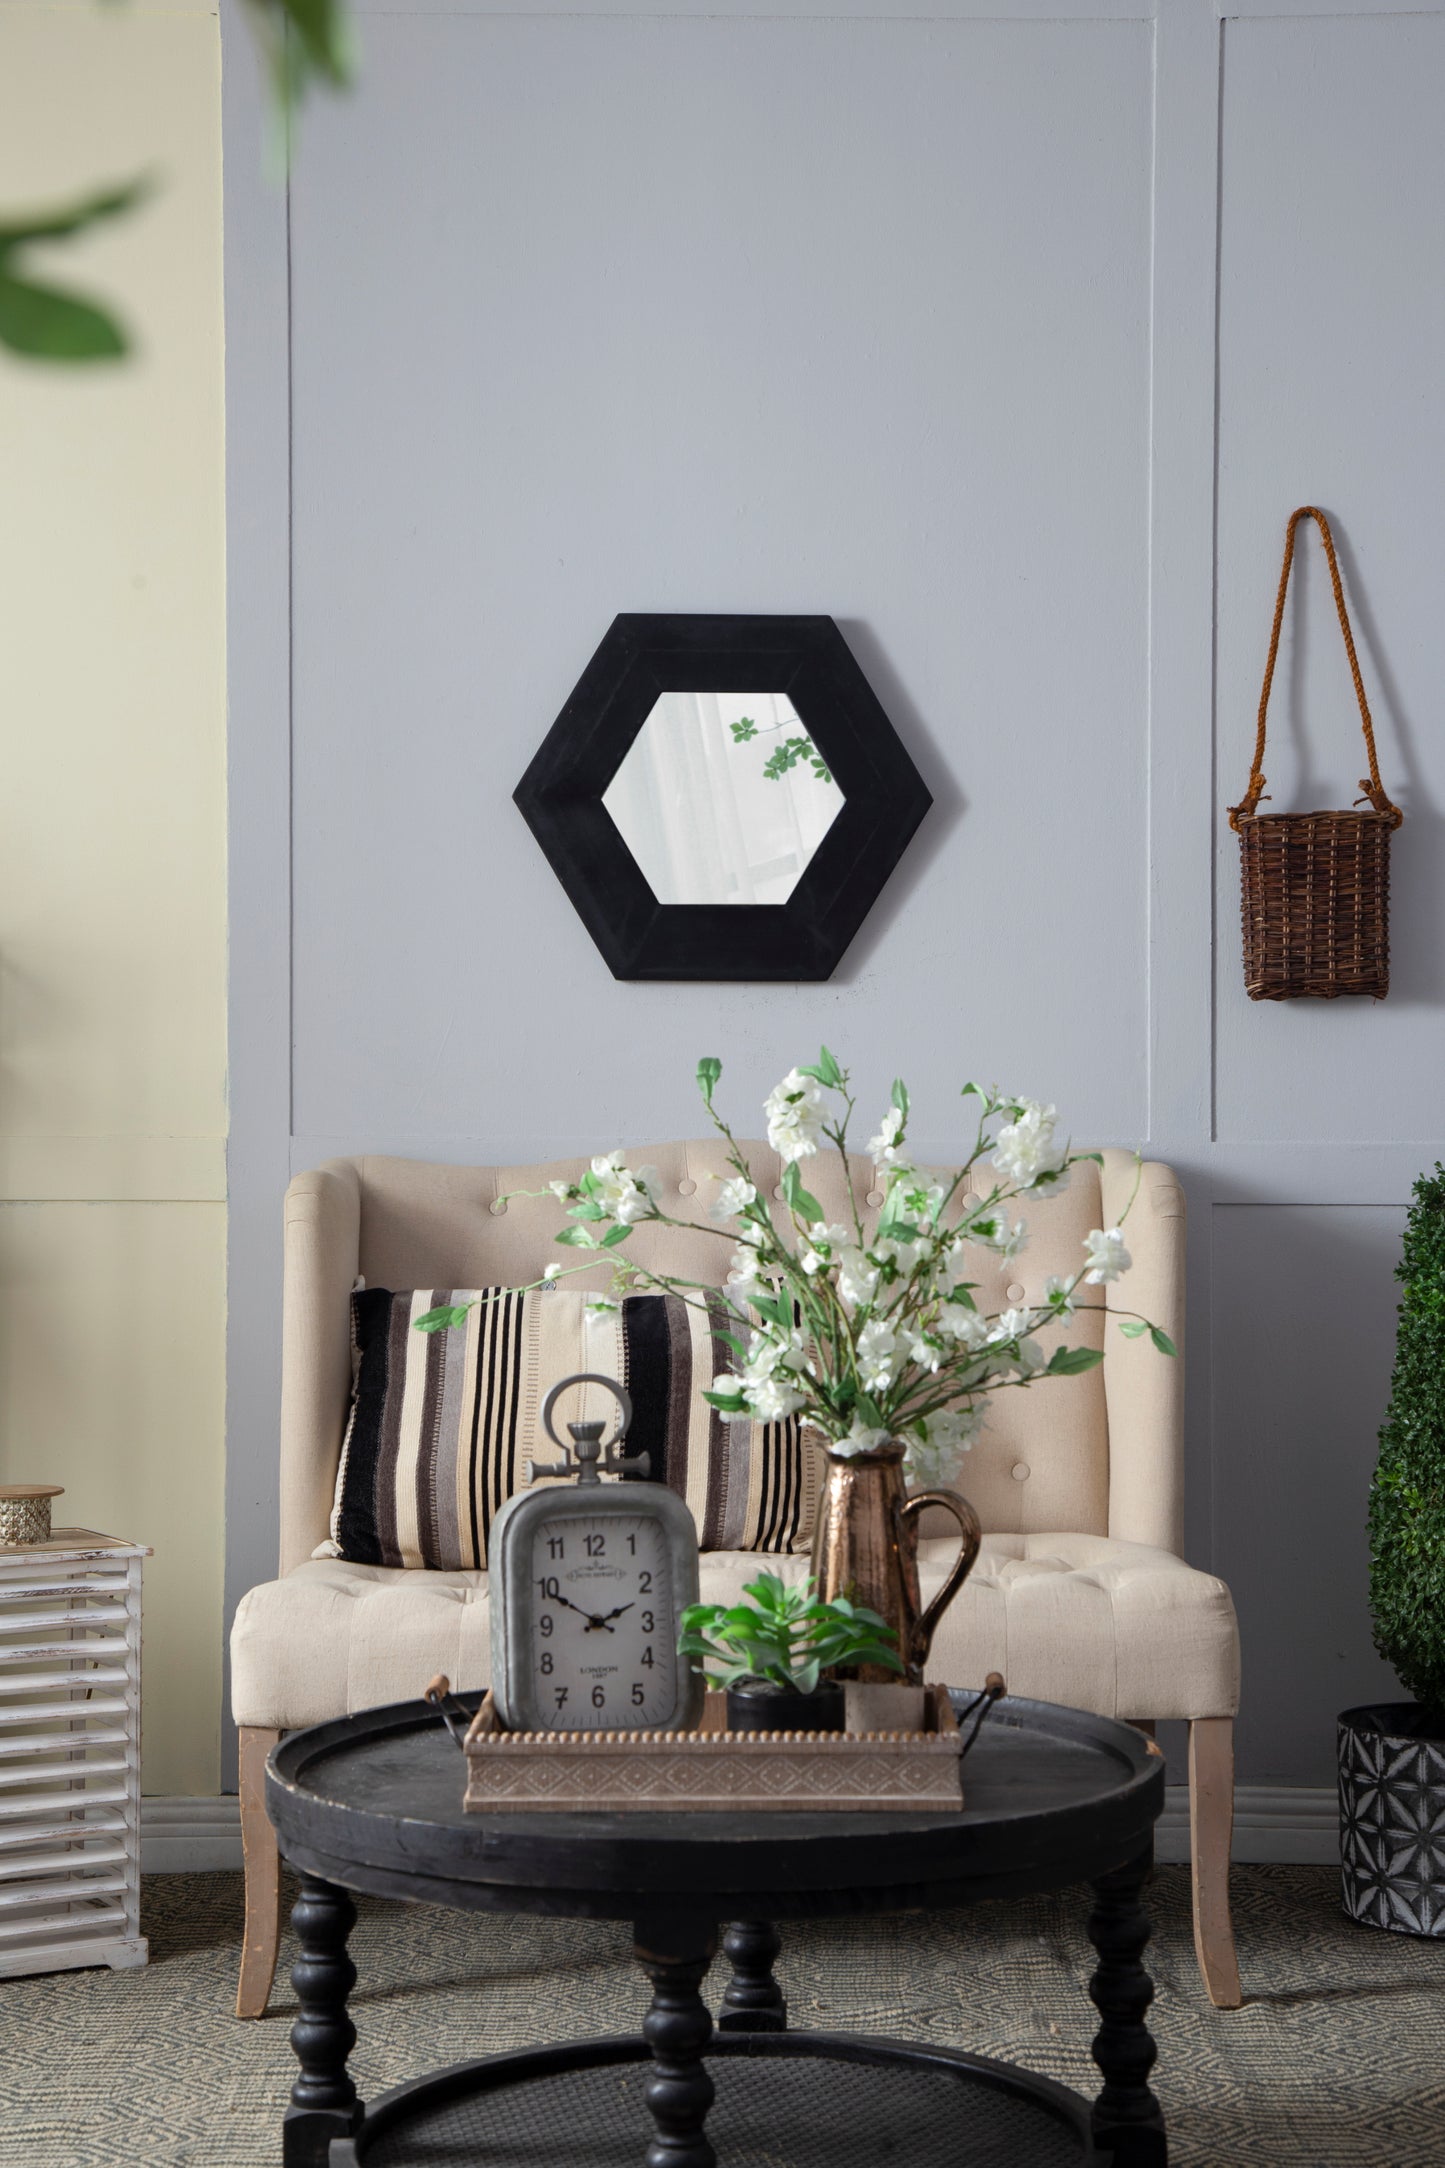 18.5" x 18.5" Hexagon Mirror with Black Wood Frame